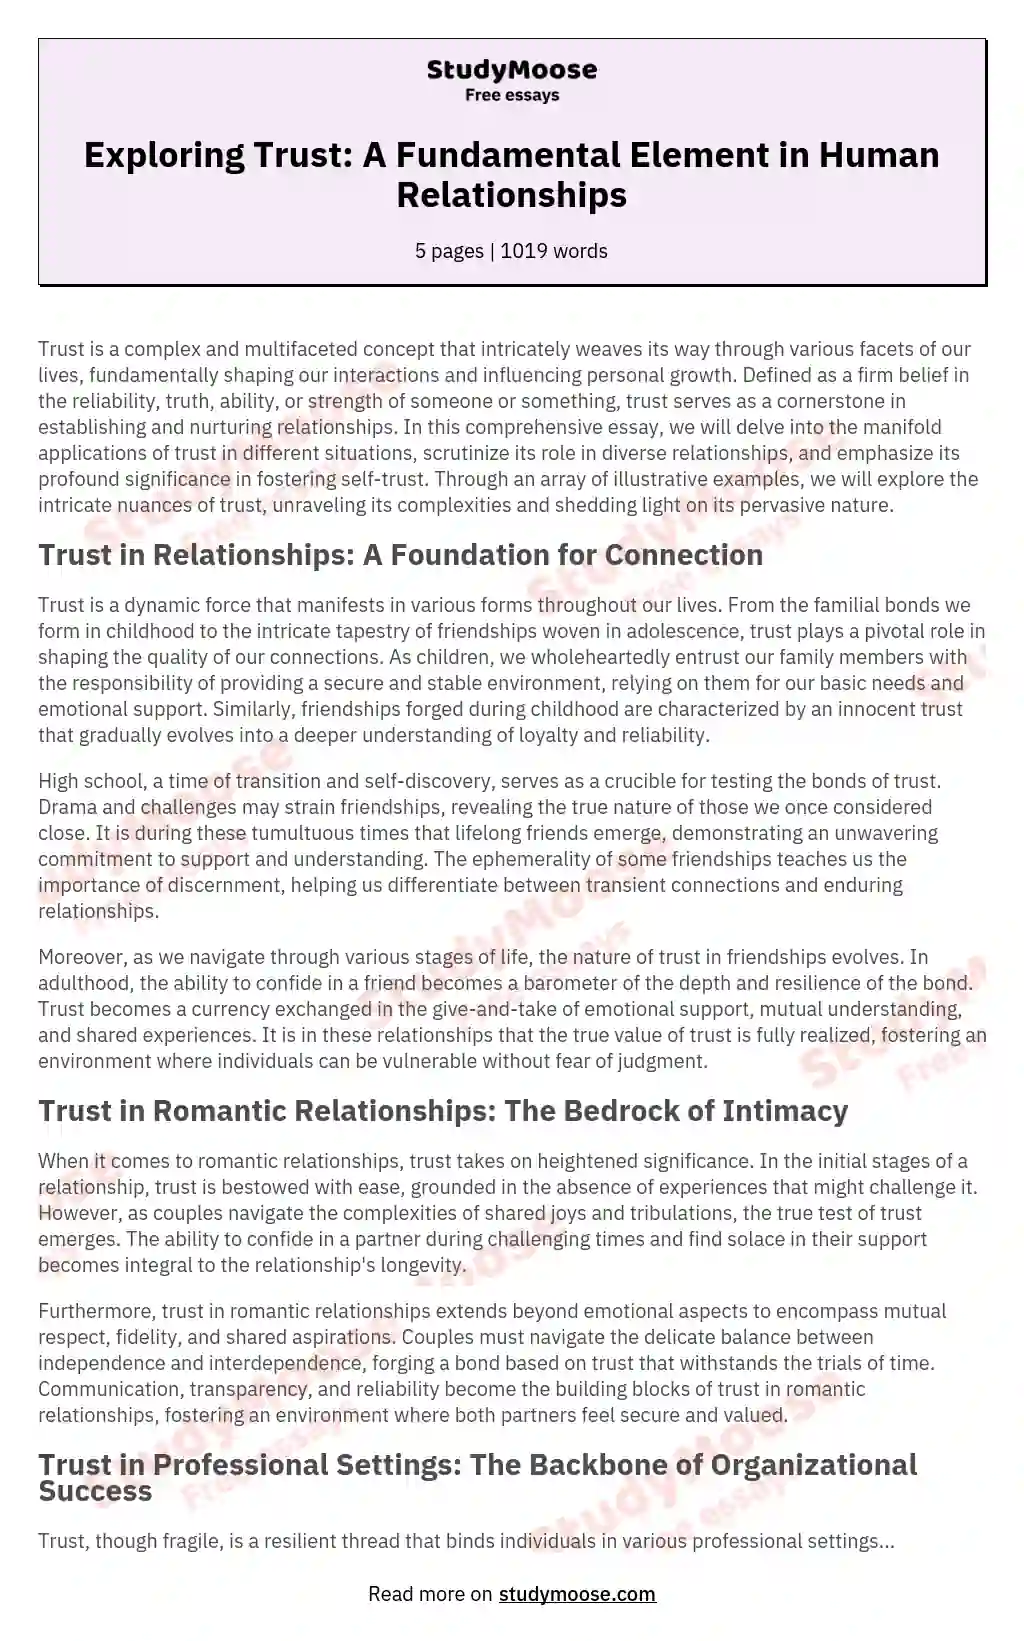 Exploring Trust: A Fundamental Element in Human Relationships essay